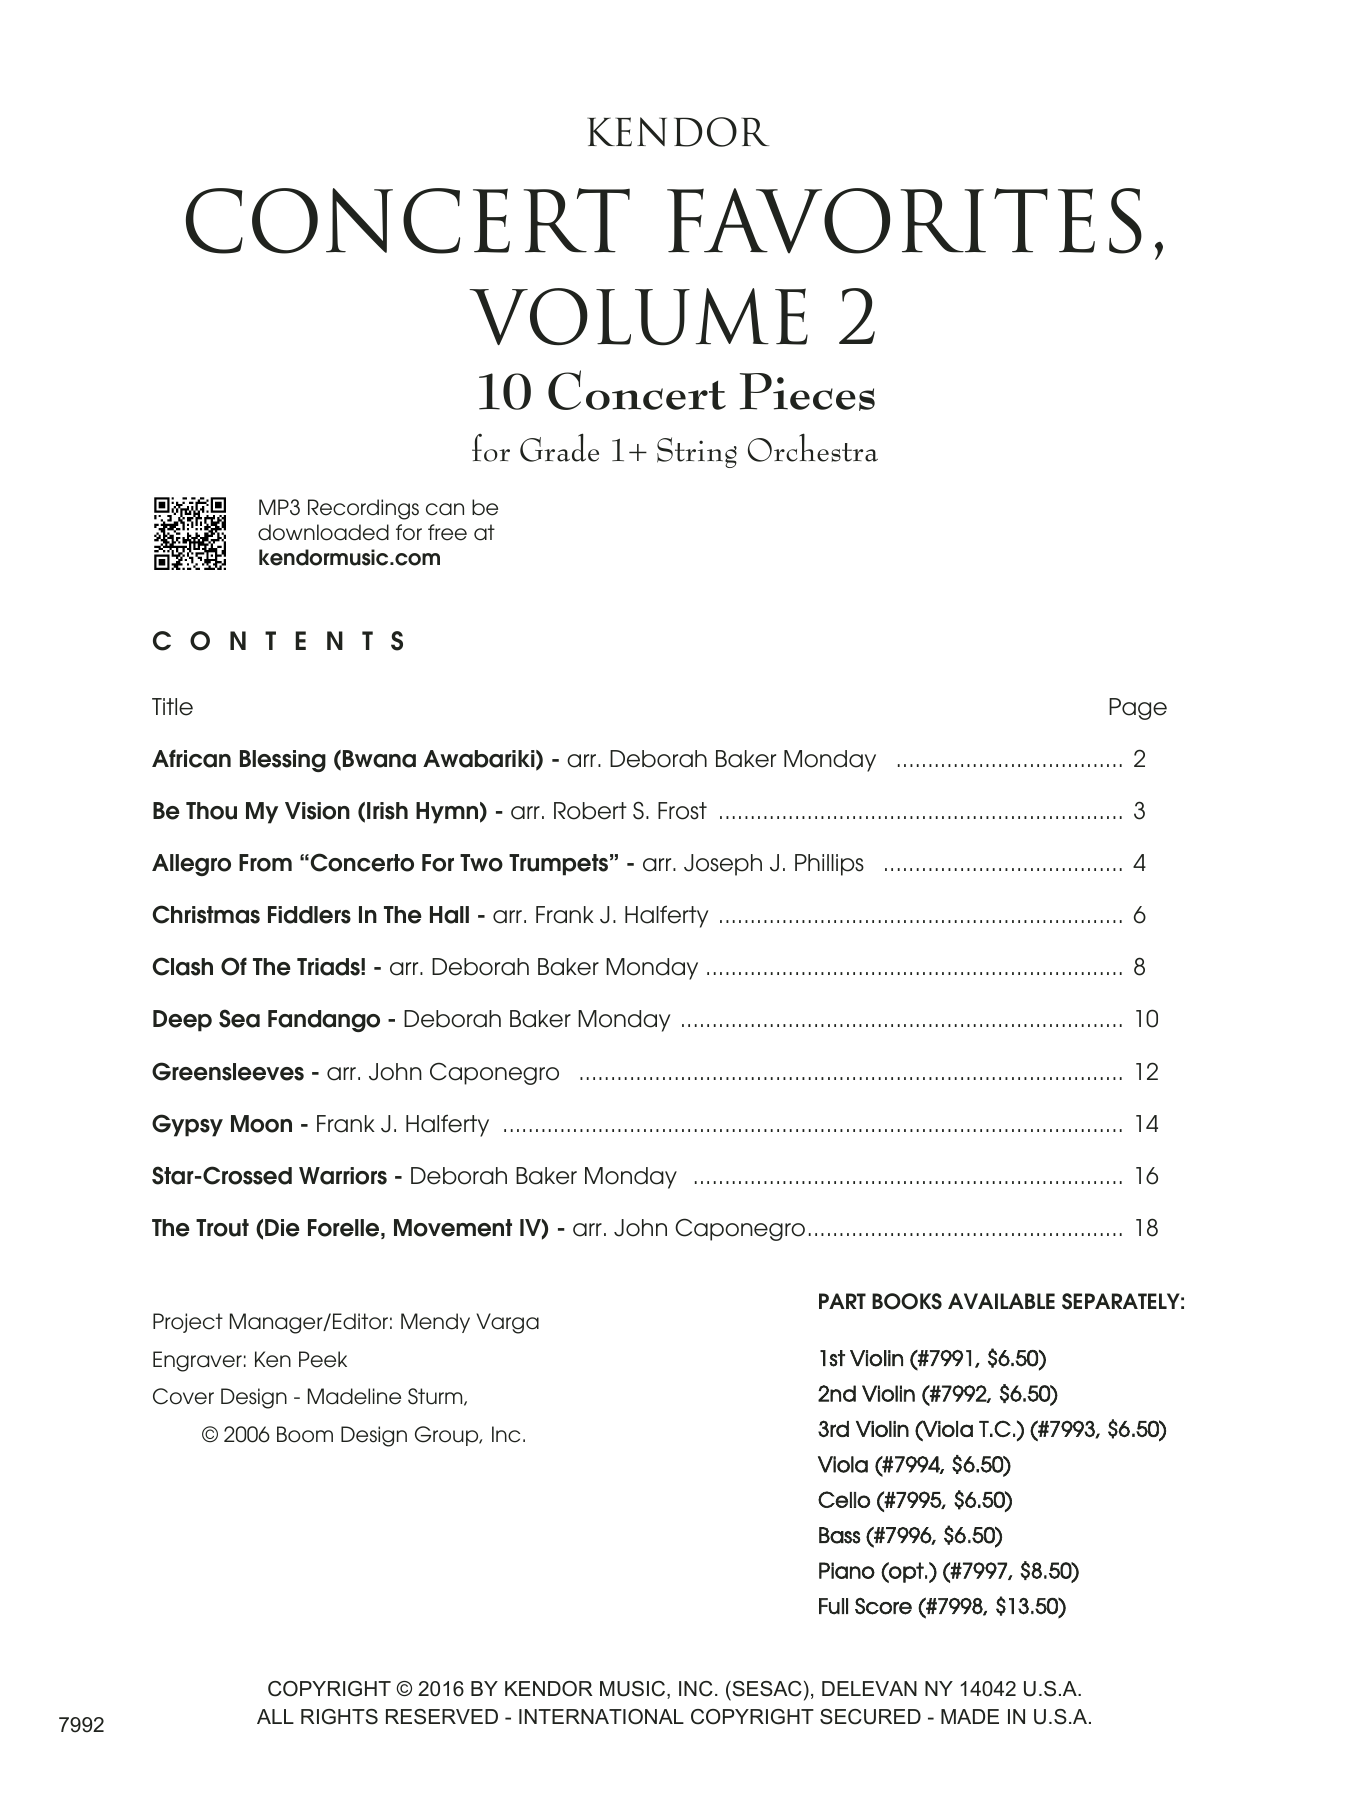 Download Various Kendor Concert Favorites, Volume 2 - 2n Sheet Music